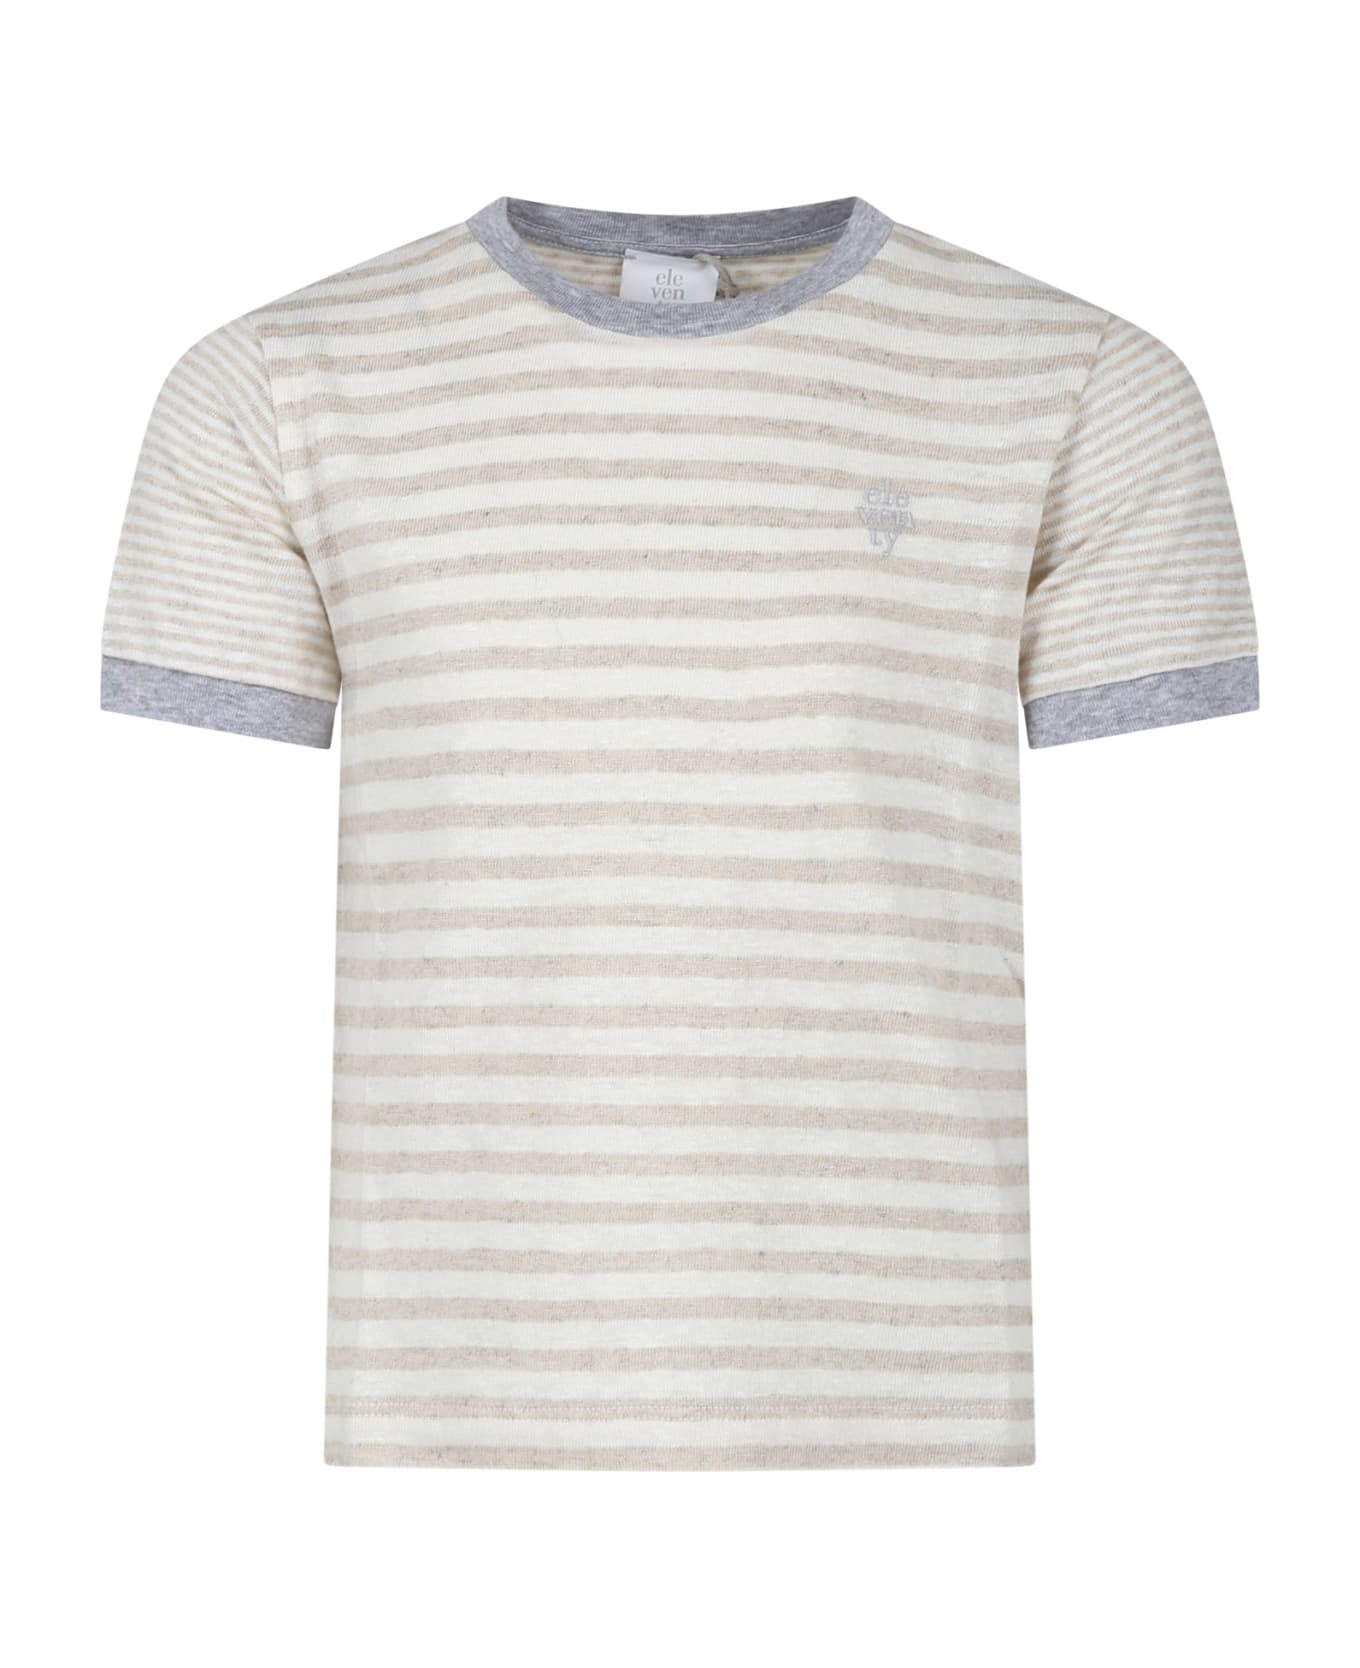 Eleventy Gray T-shirt For Boy - Beige